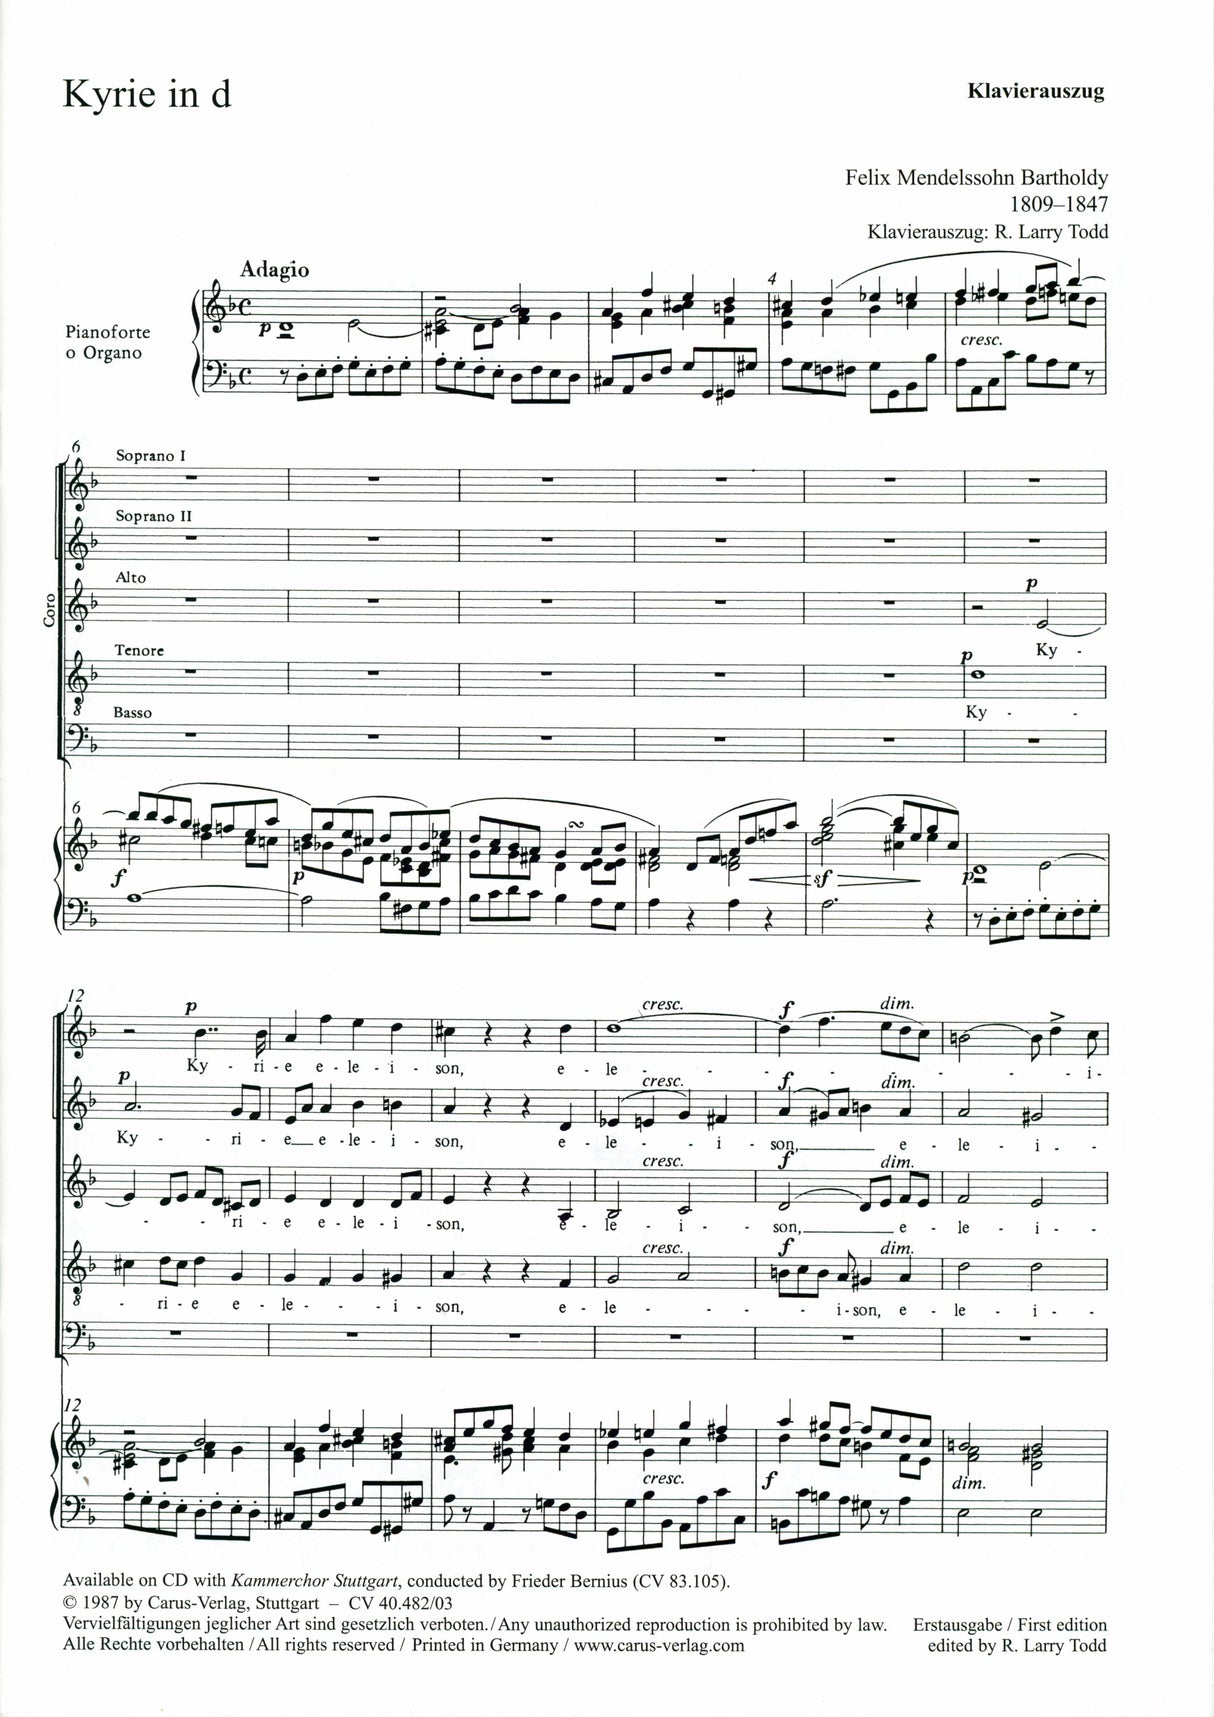 Mendelssohn: Kyrie in D Minor